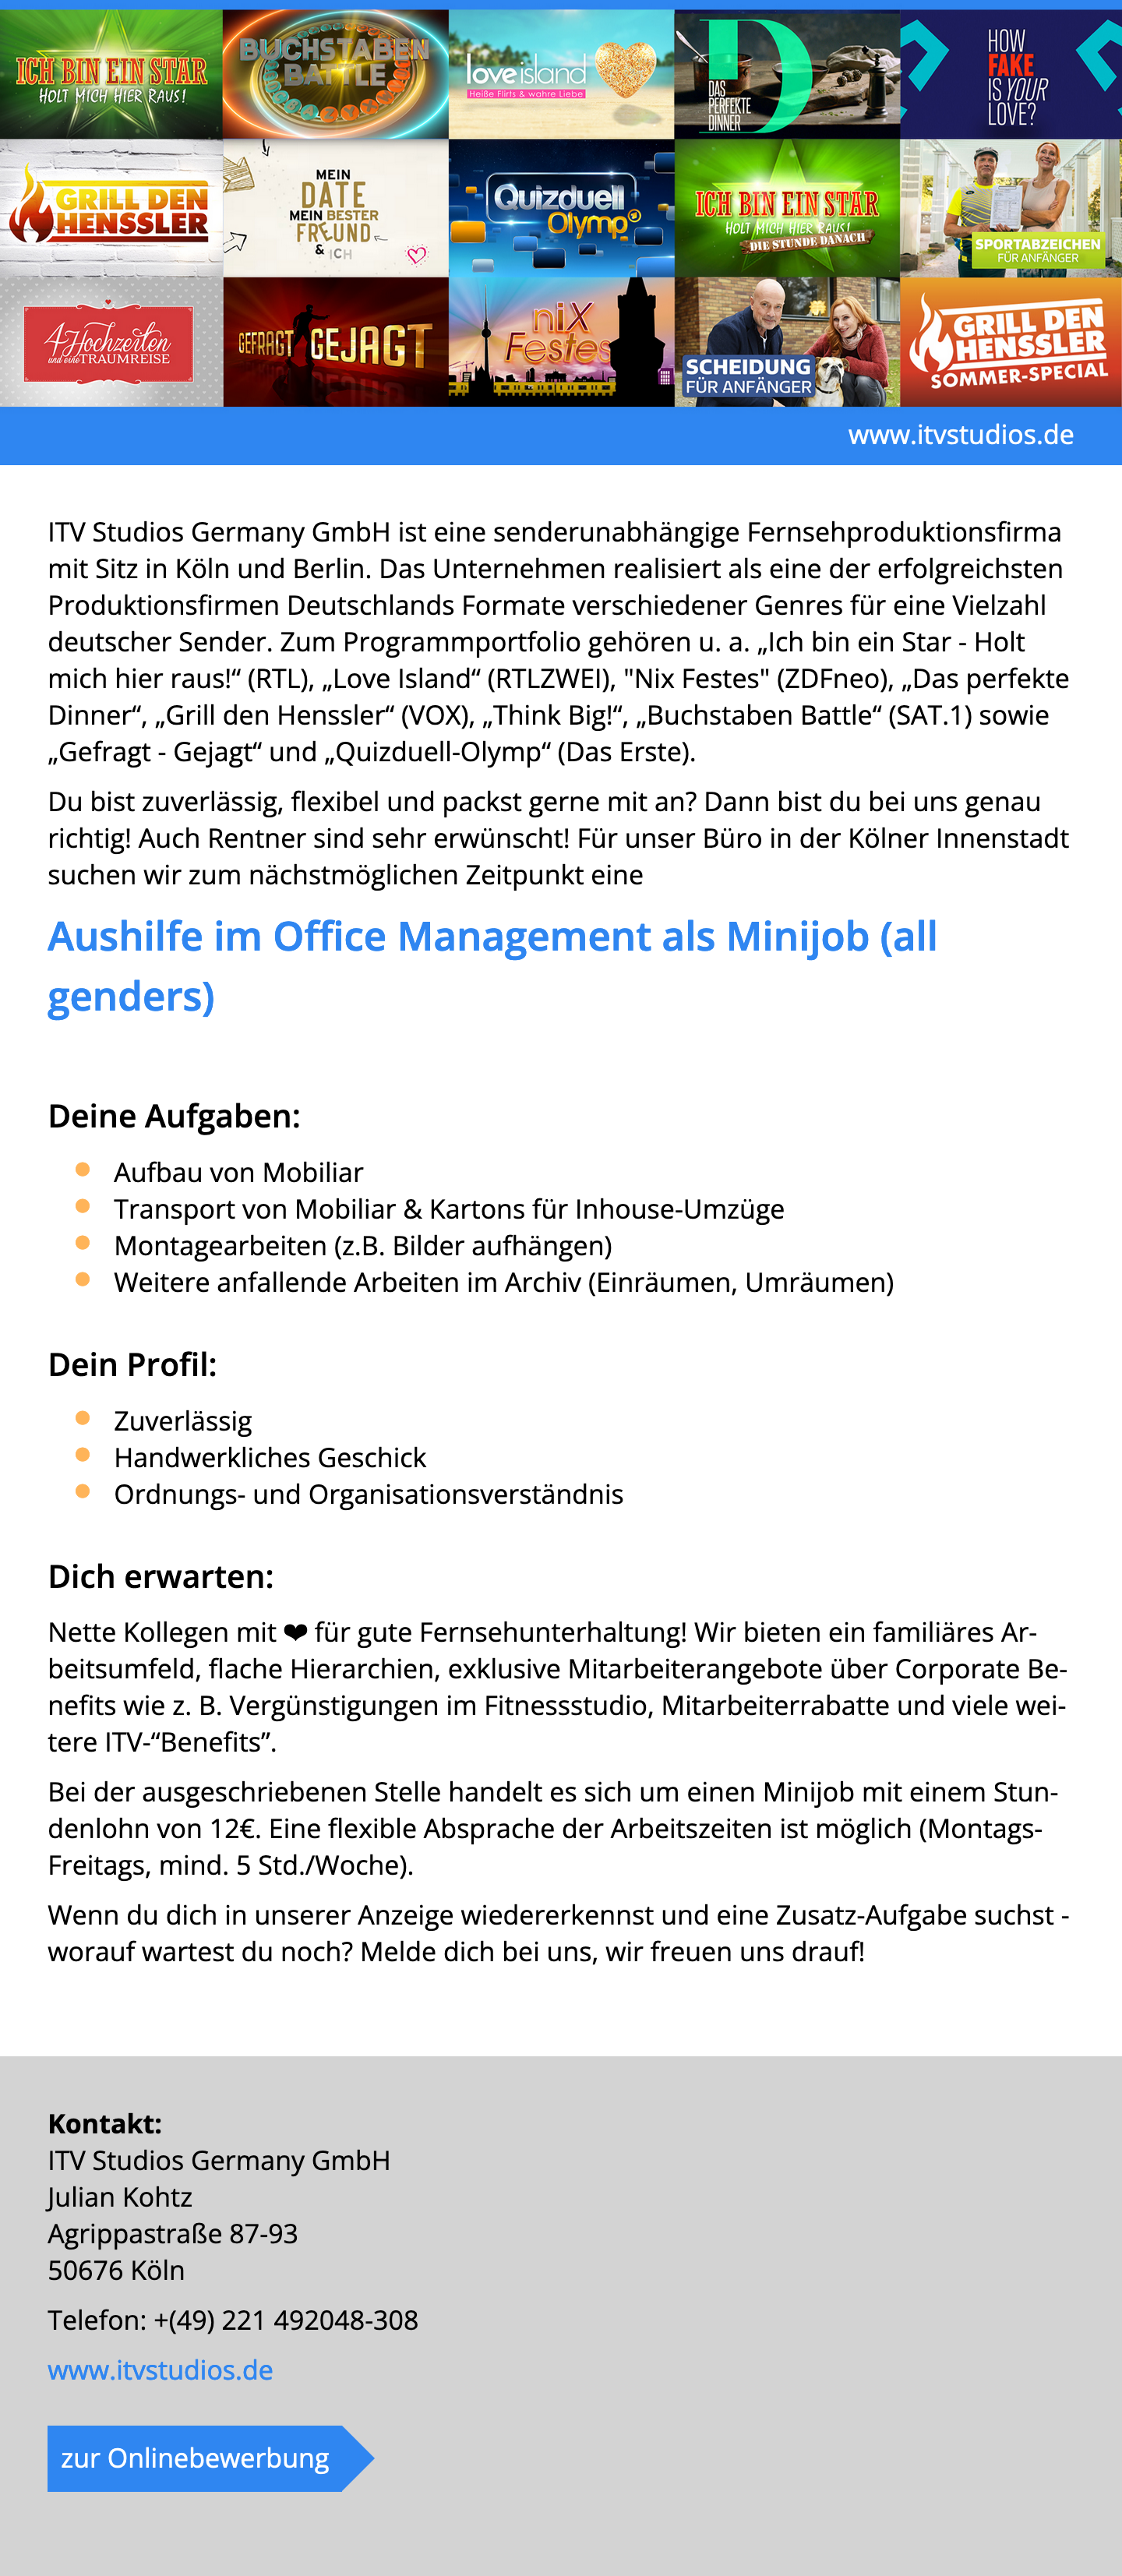 Aushilfe im Office Management als Minijob (all genders)